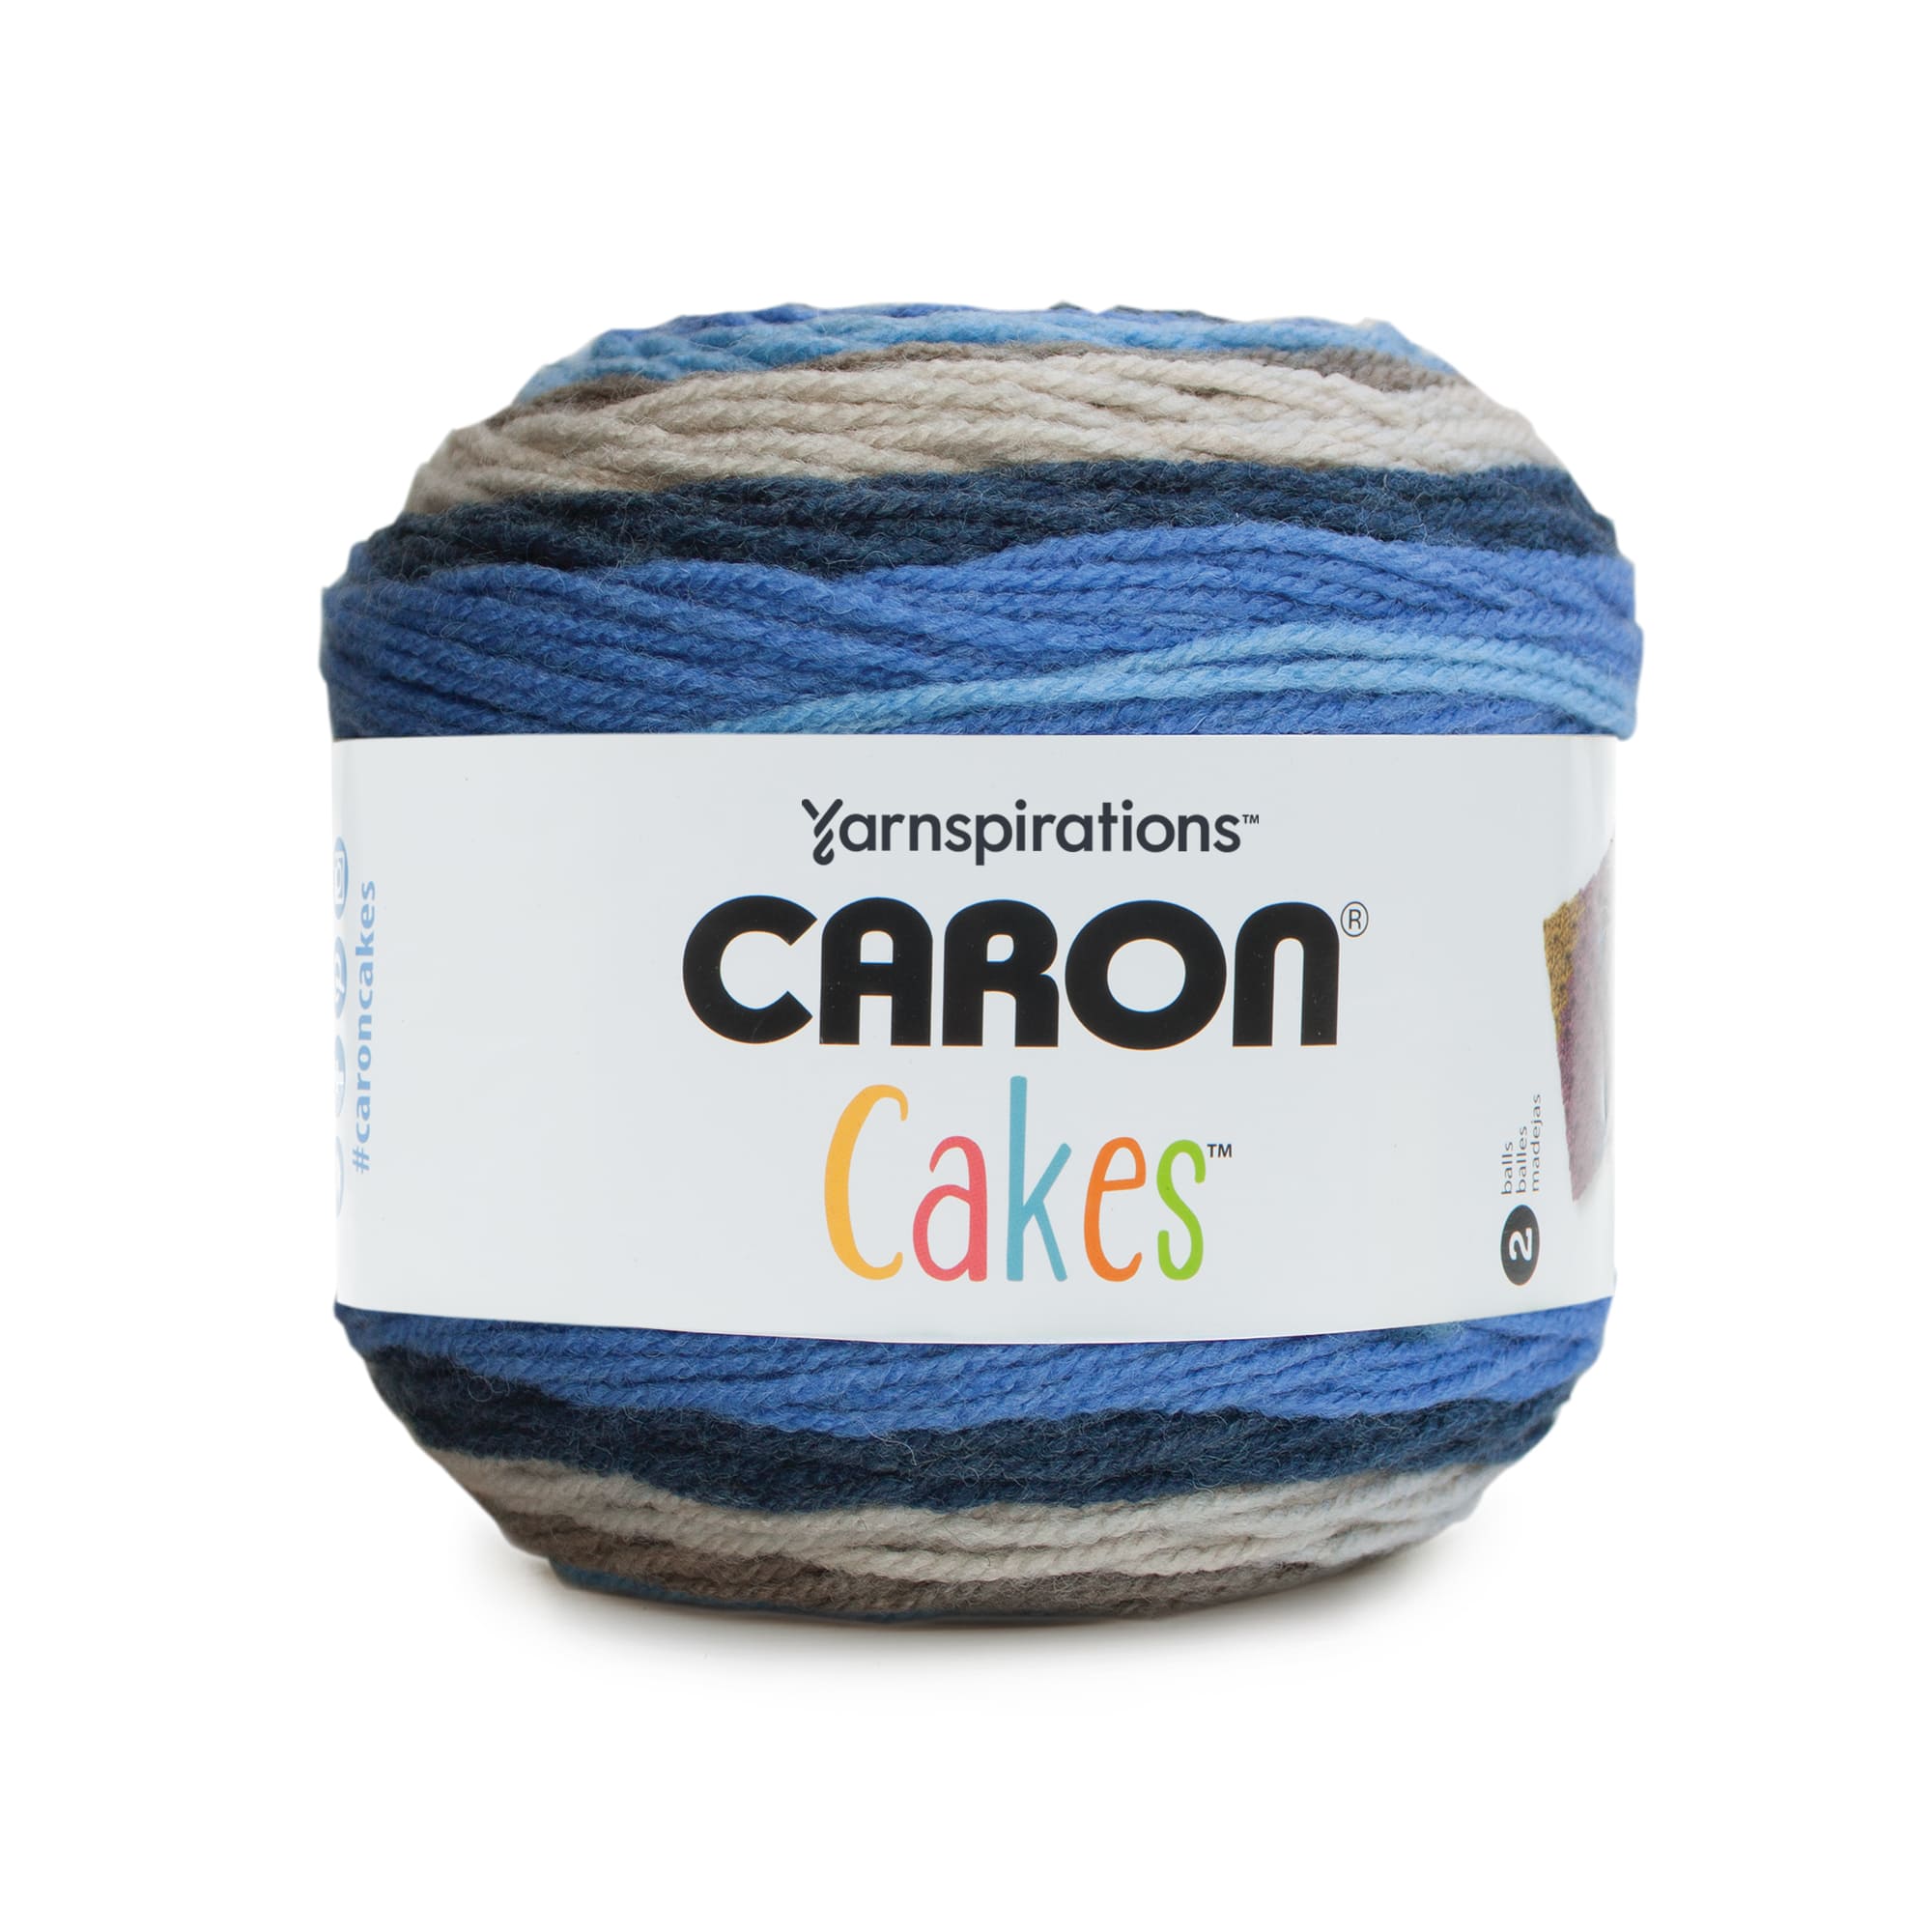 Caron® Cloud Cakes™ Yarn - HandcraftdLuv Inc